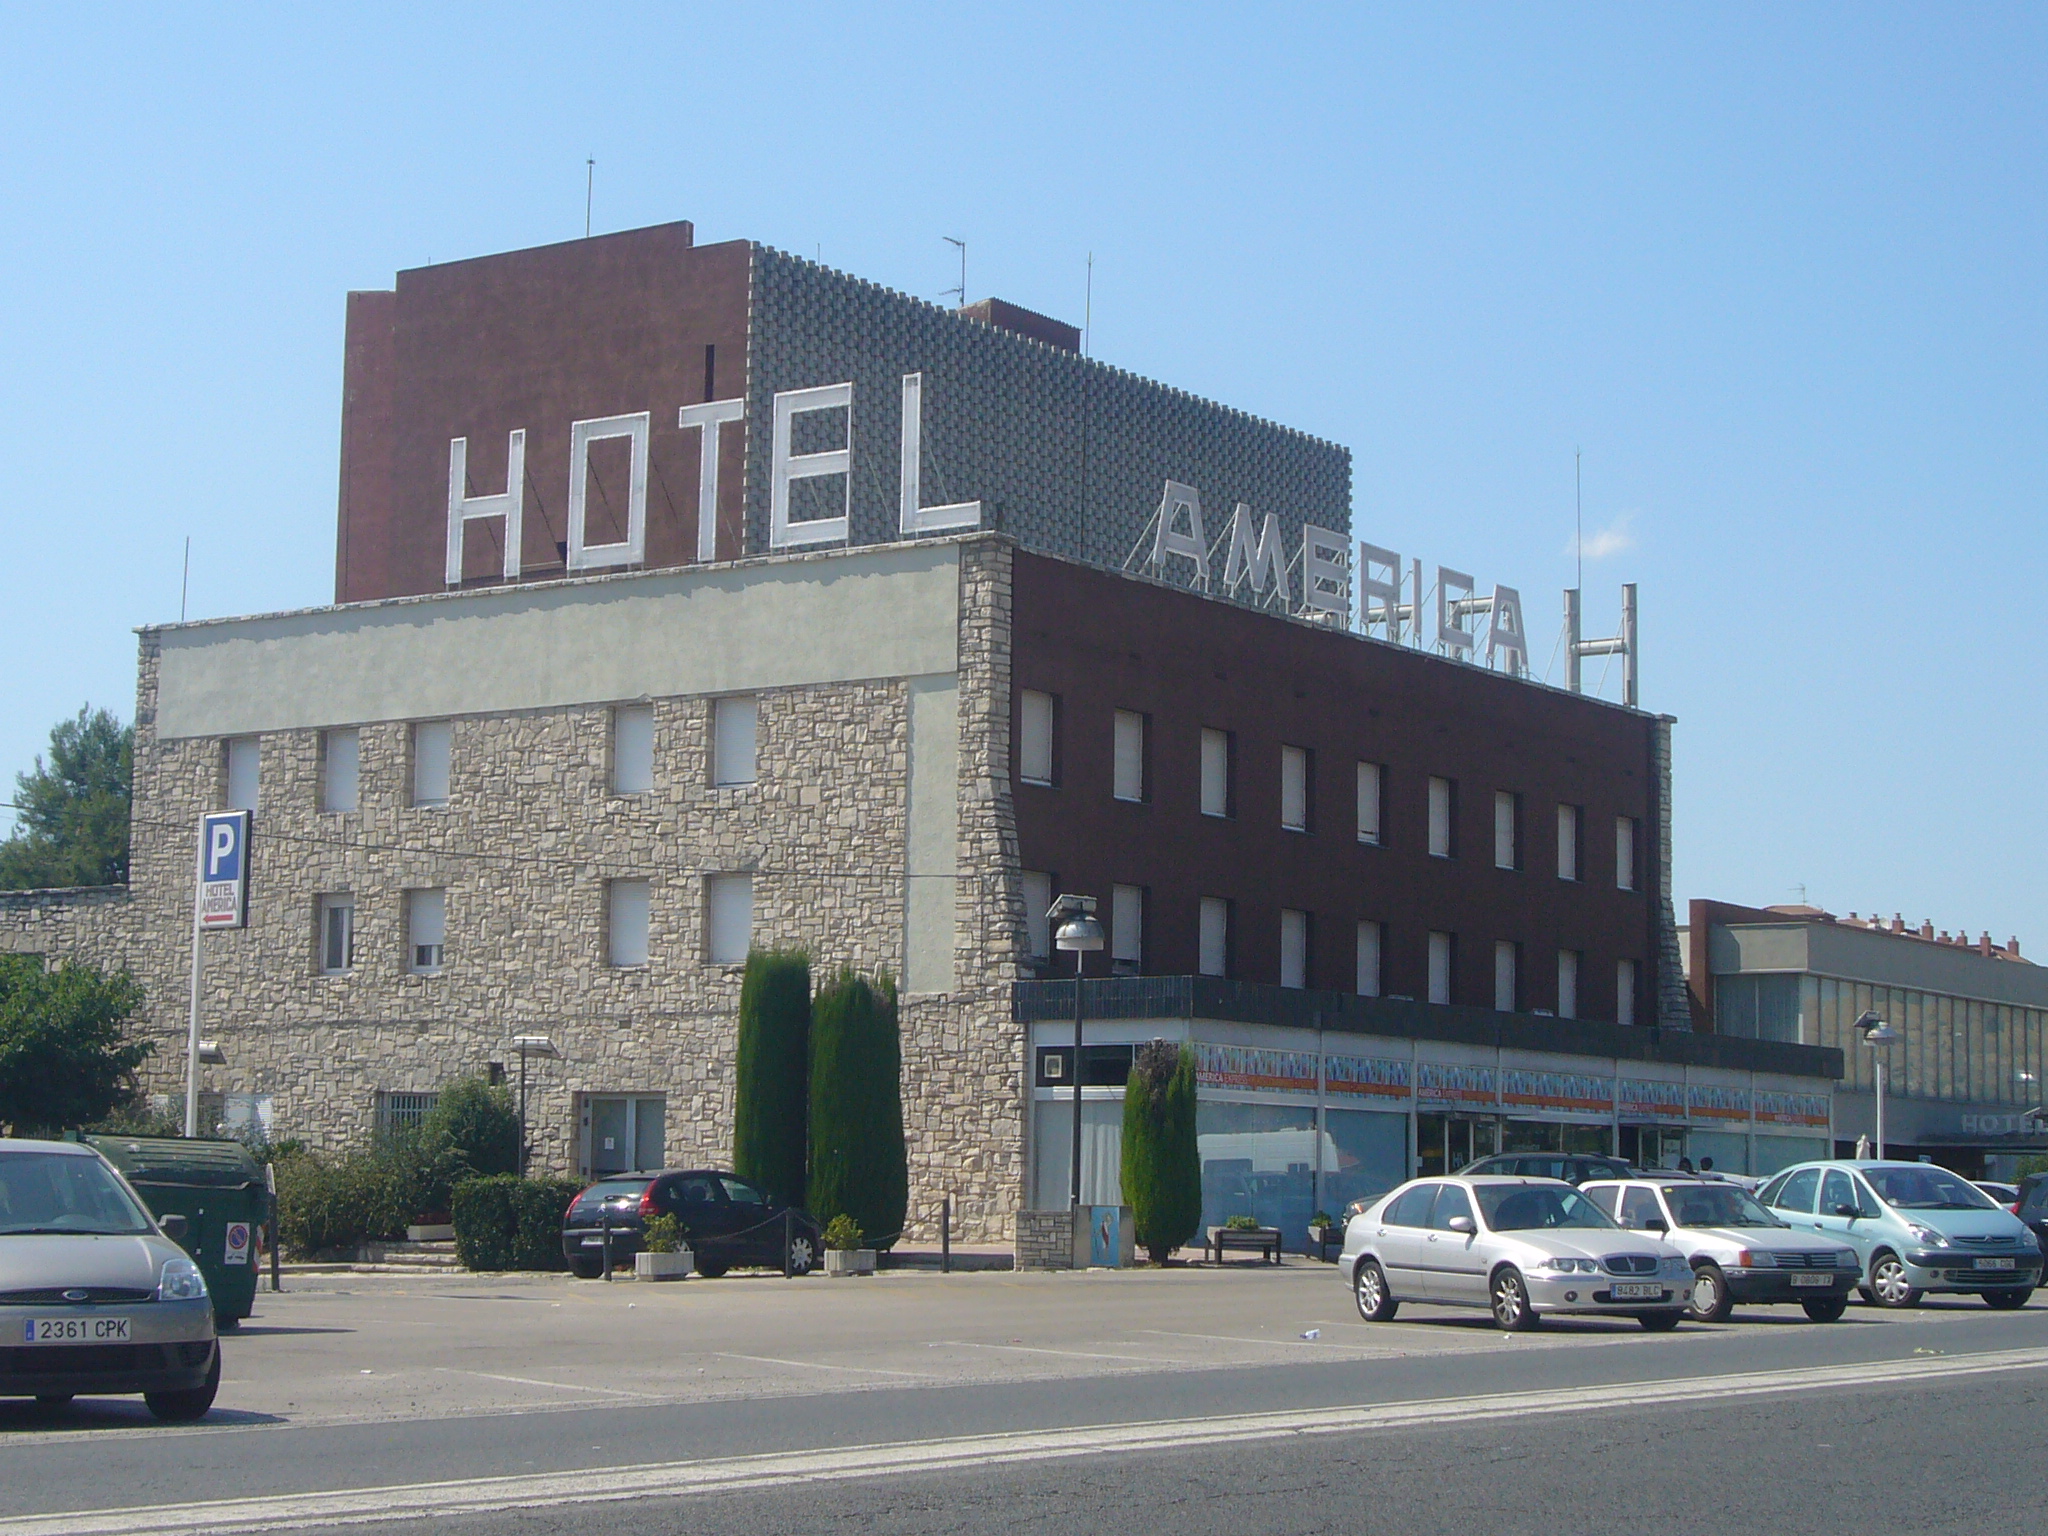 File:Hotel America, Igualada.jpg - Wikimedia Commons